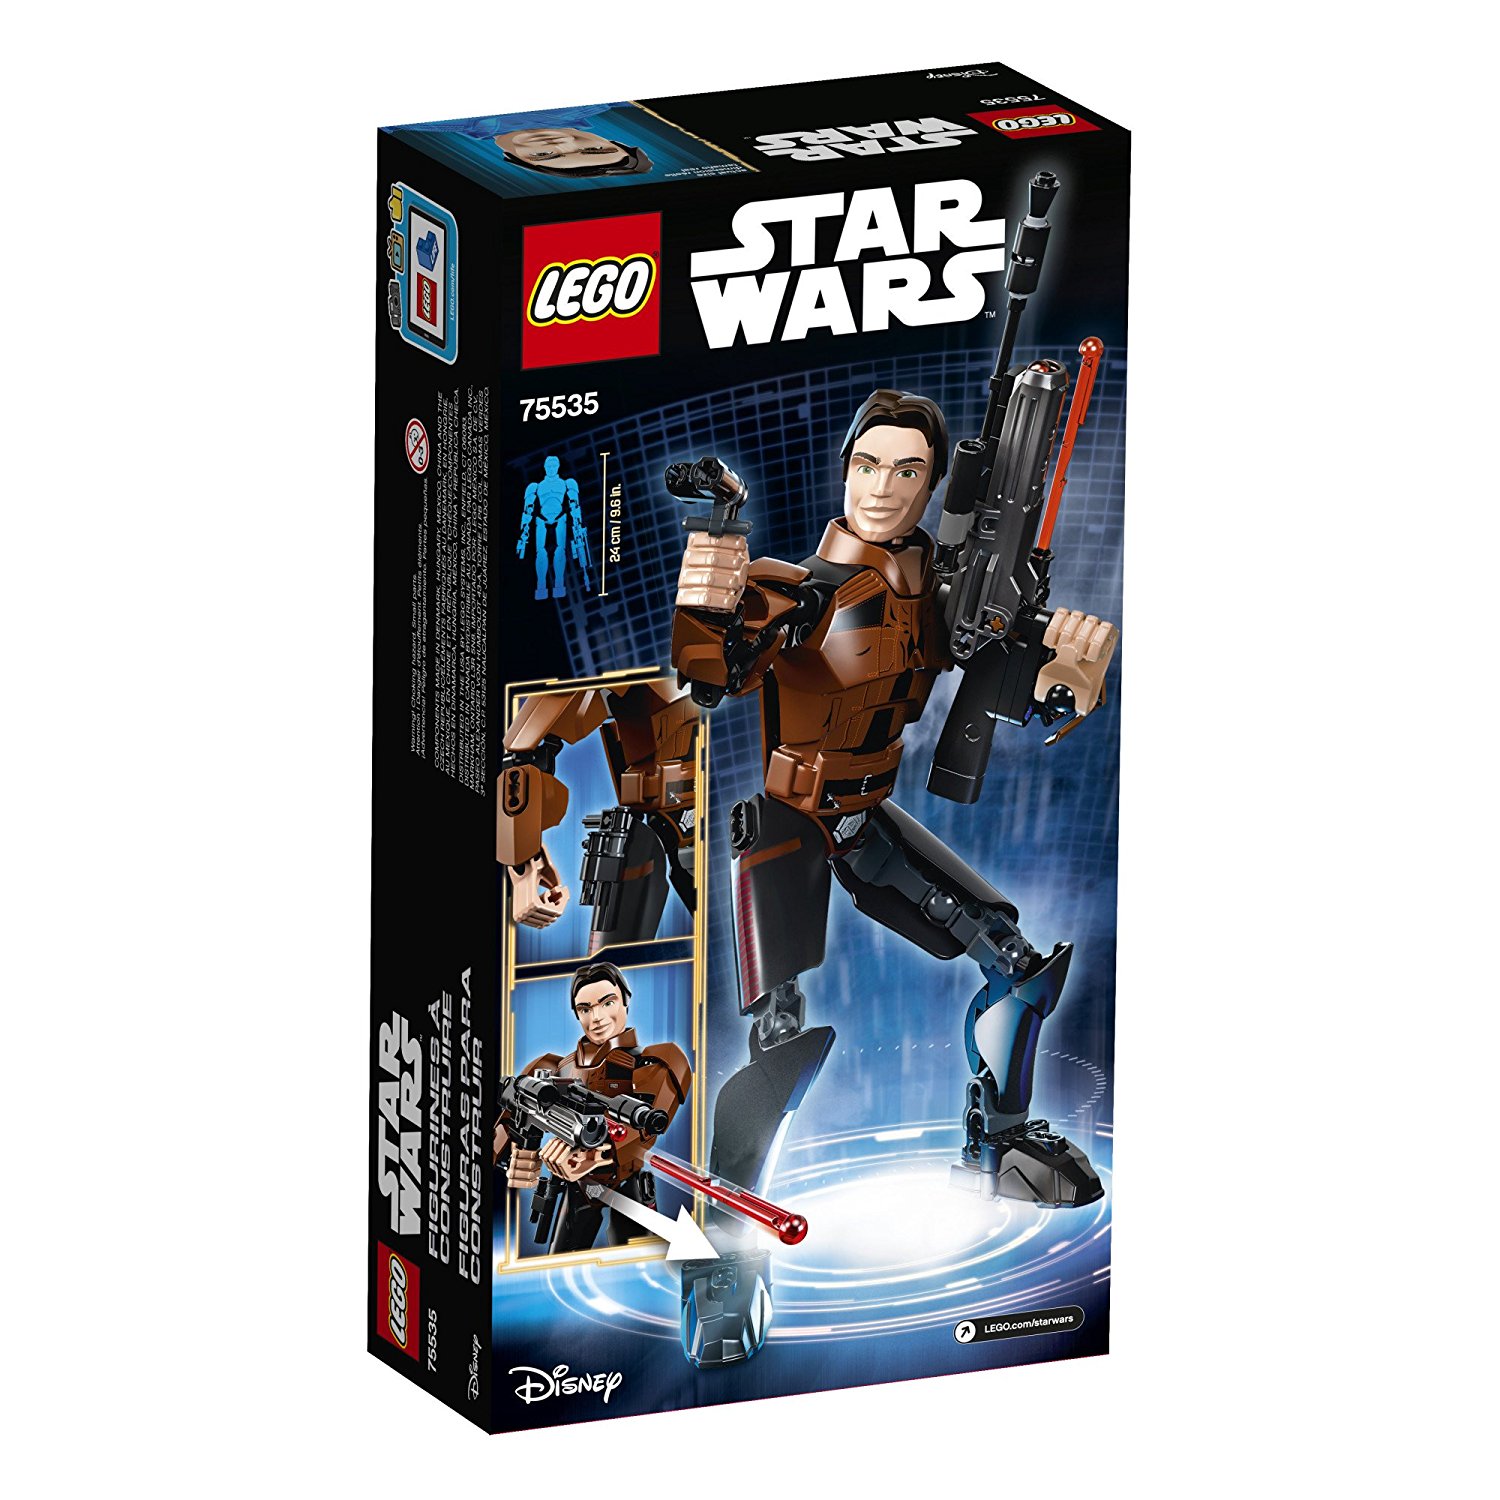 Solo: ASWS Lego Han Solo Buildable Figure 2